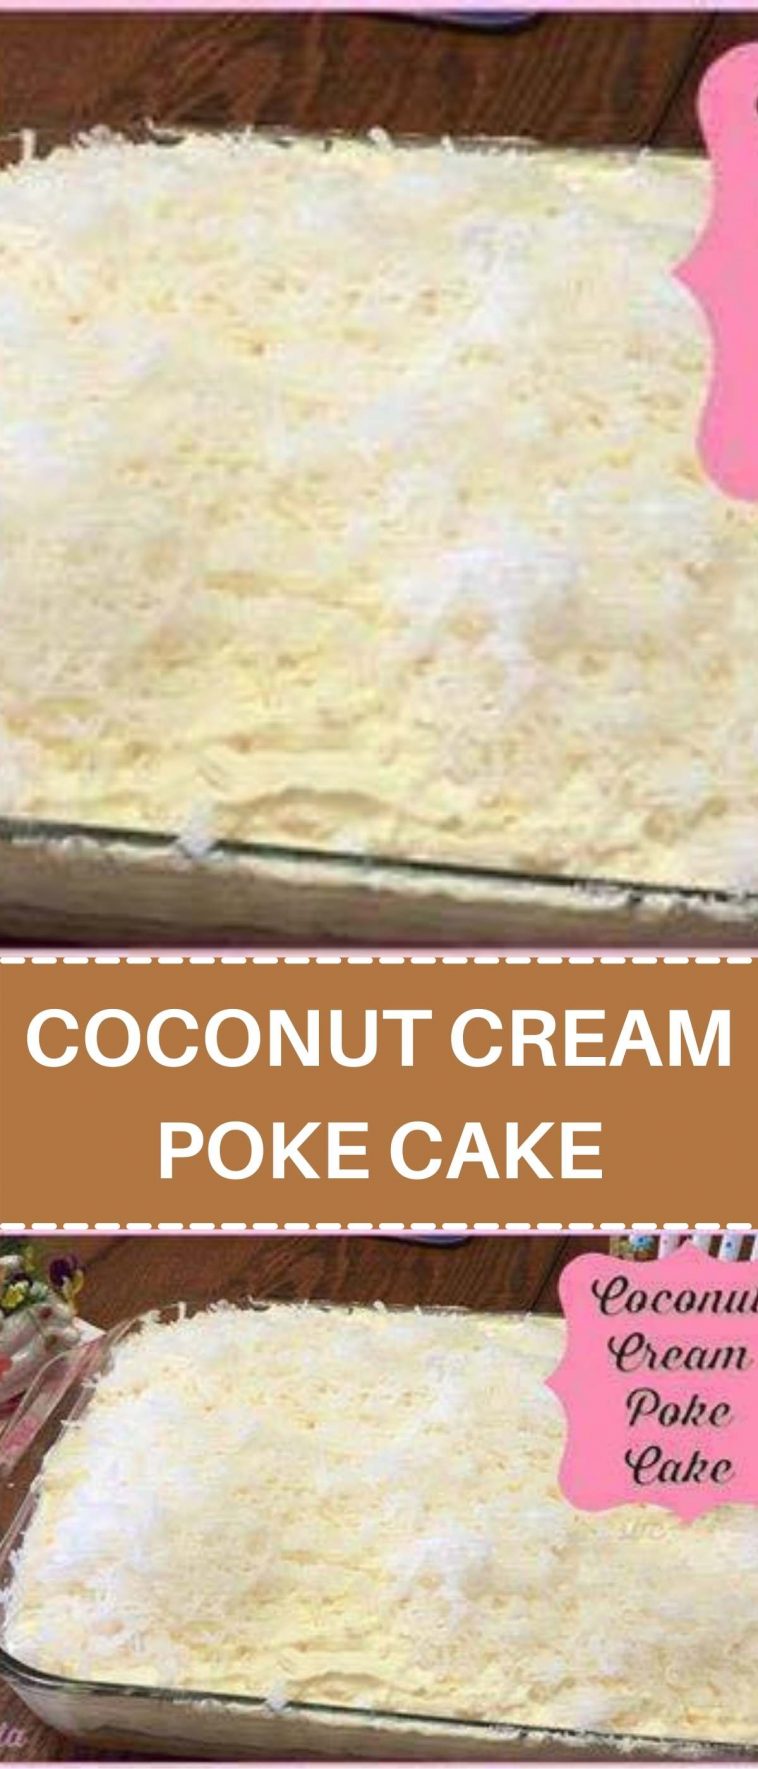 COCONUT CREAM POKE CAKE